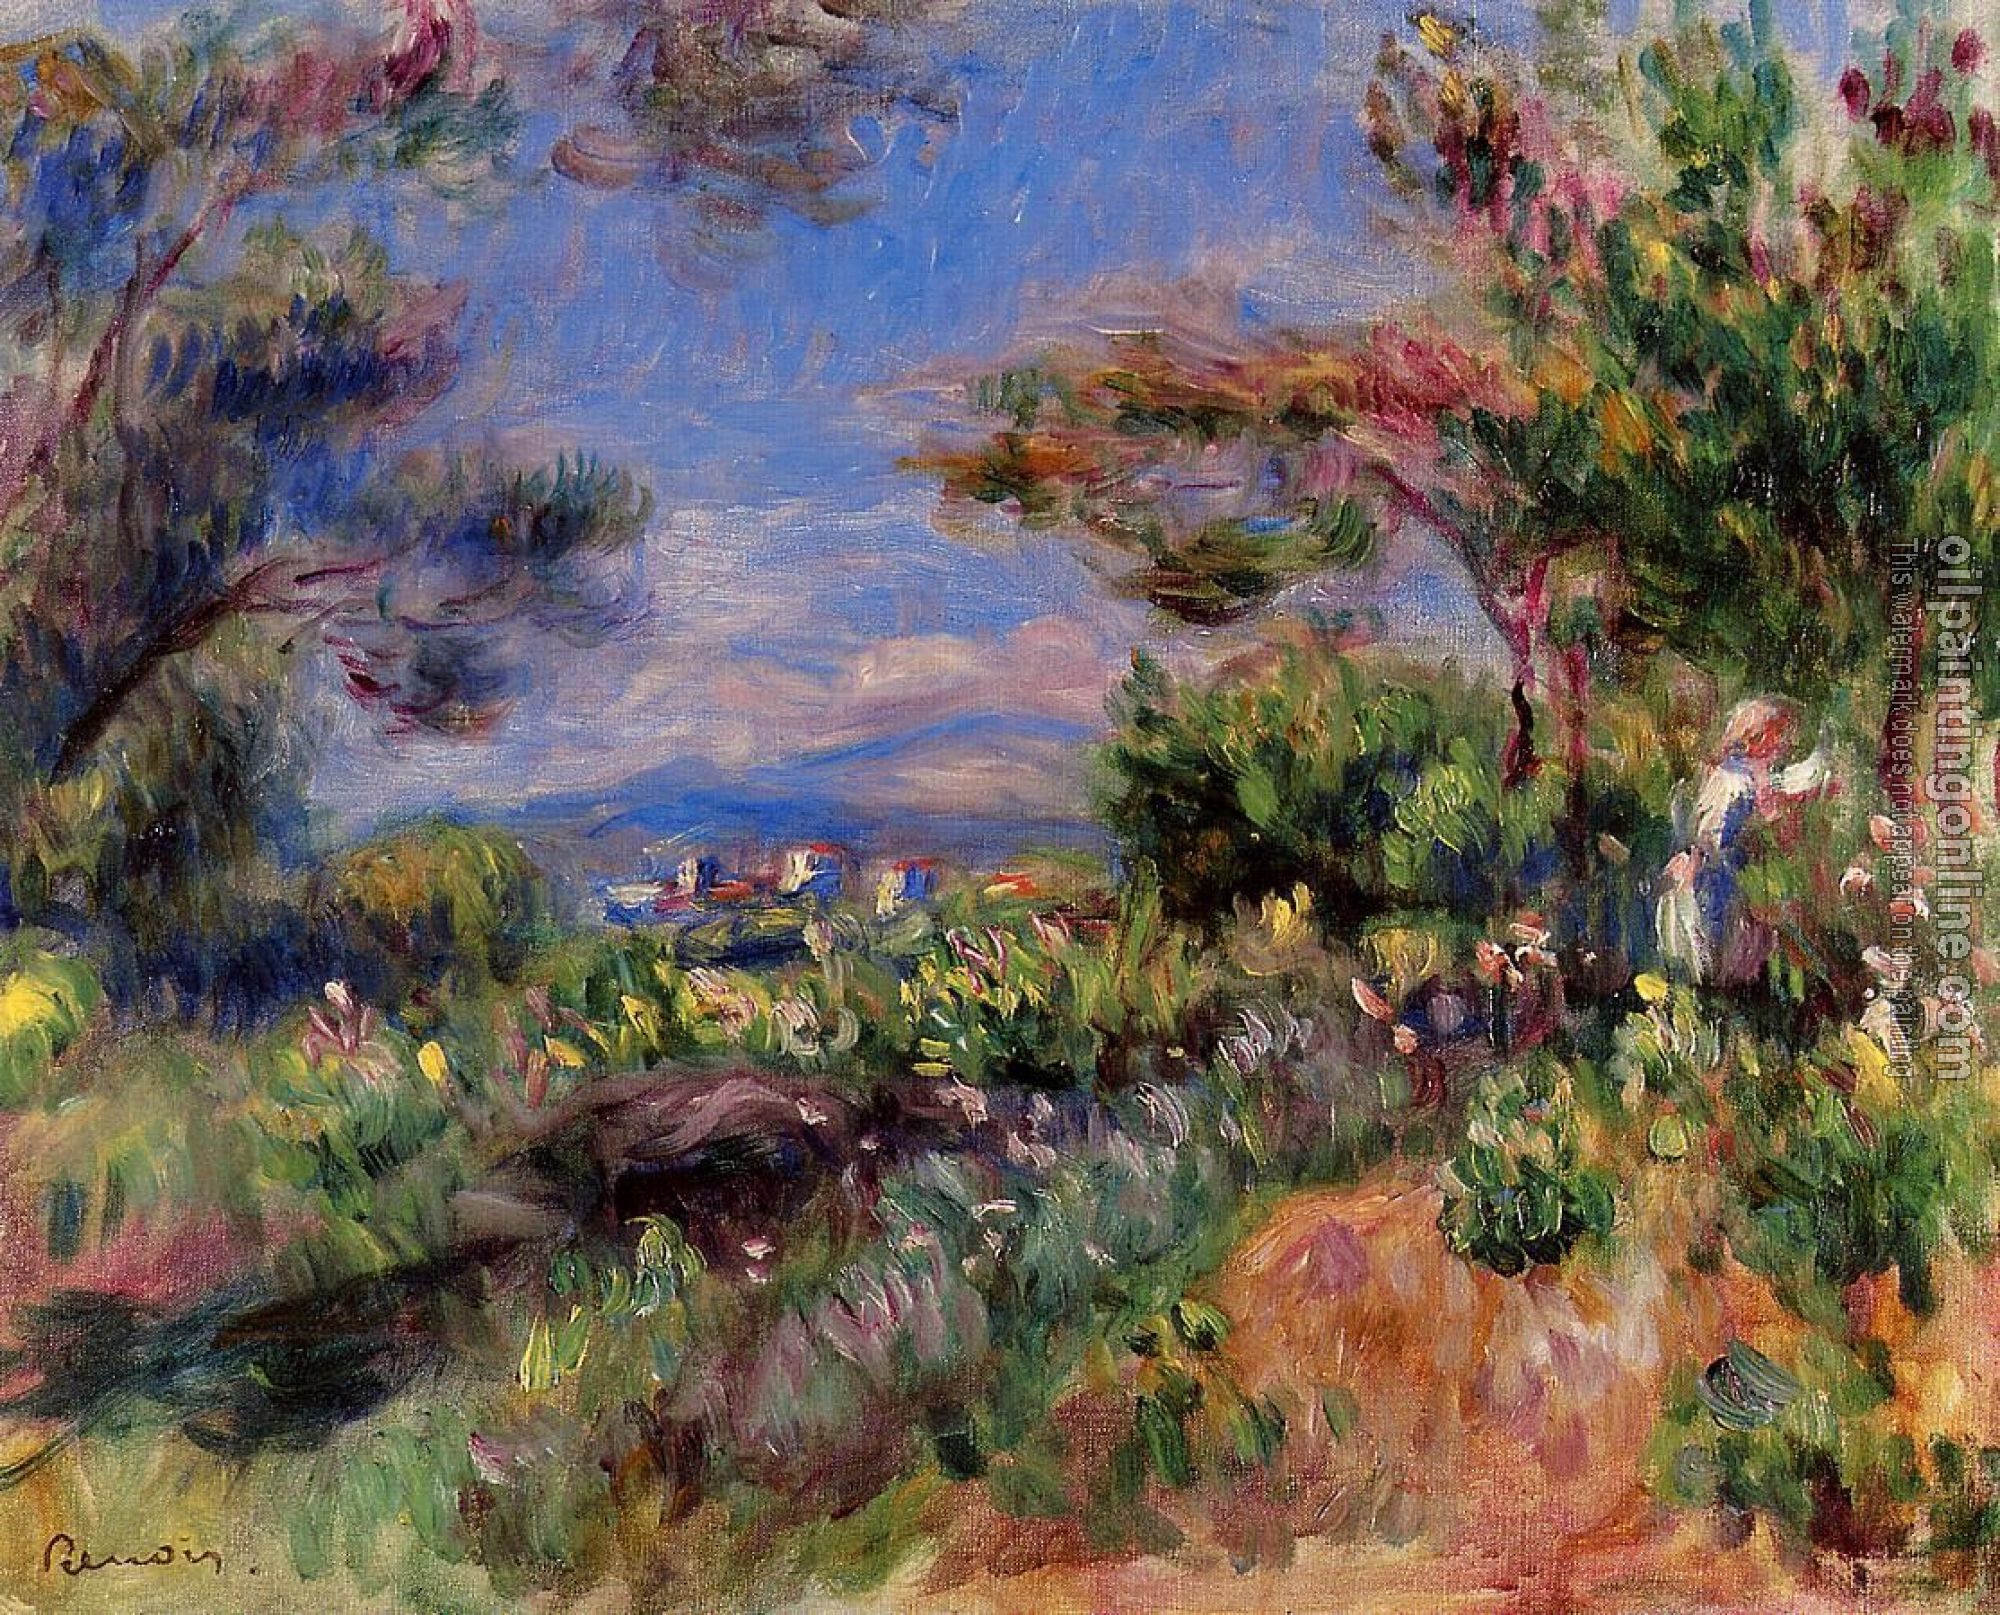 Renoir, Pierre Auguste - Young Woman in a Landscape, Cagnes